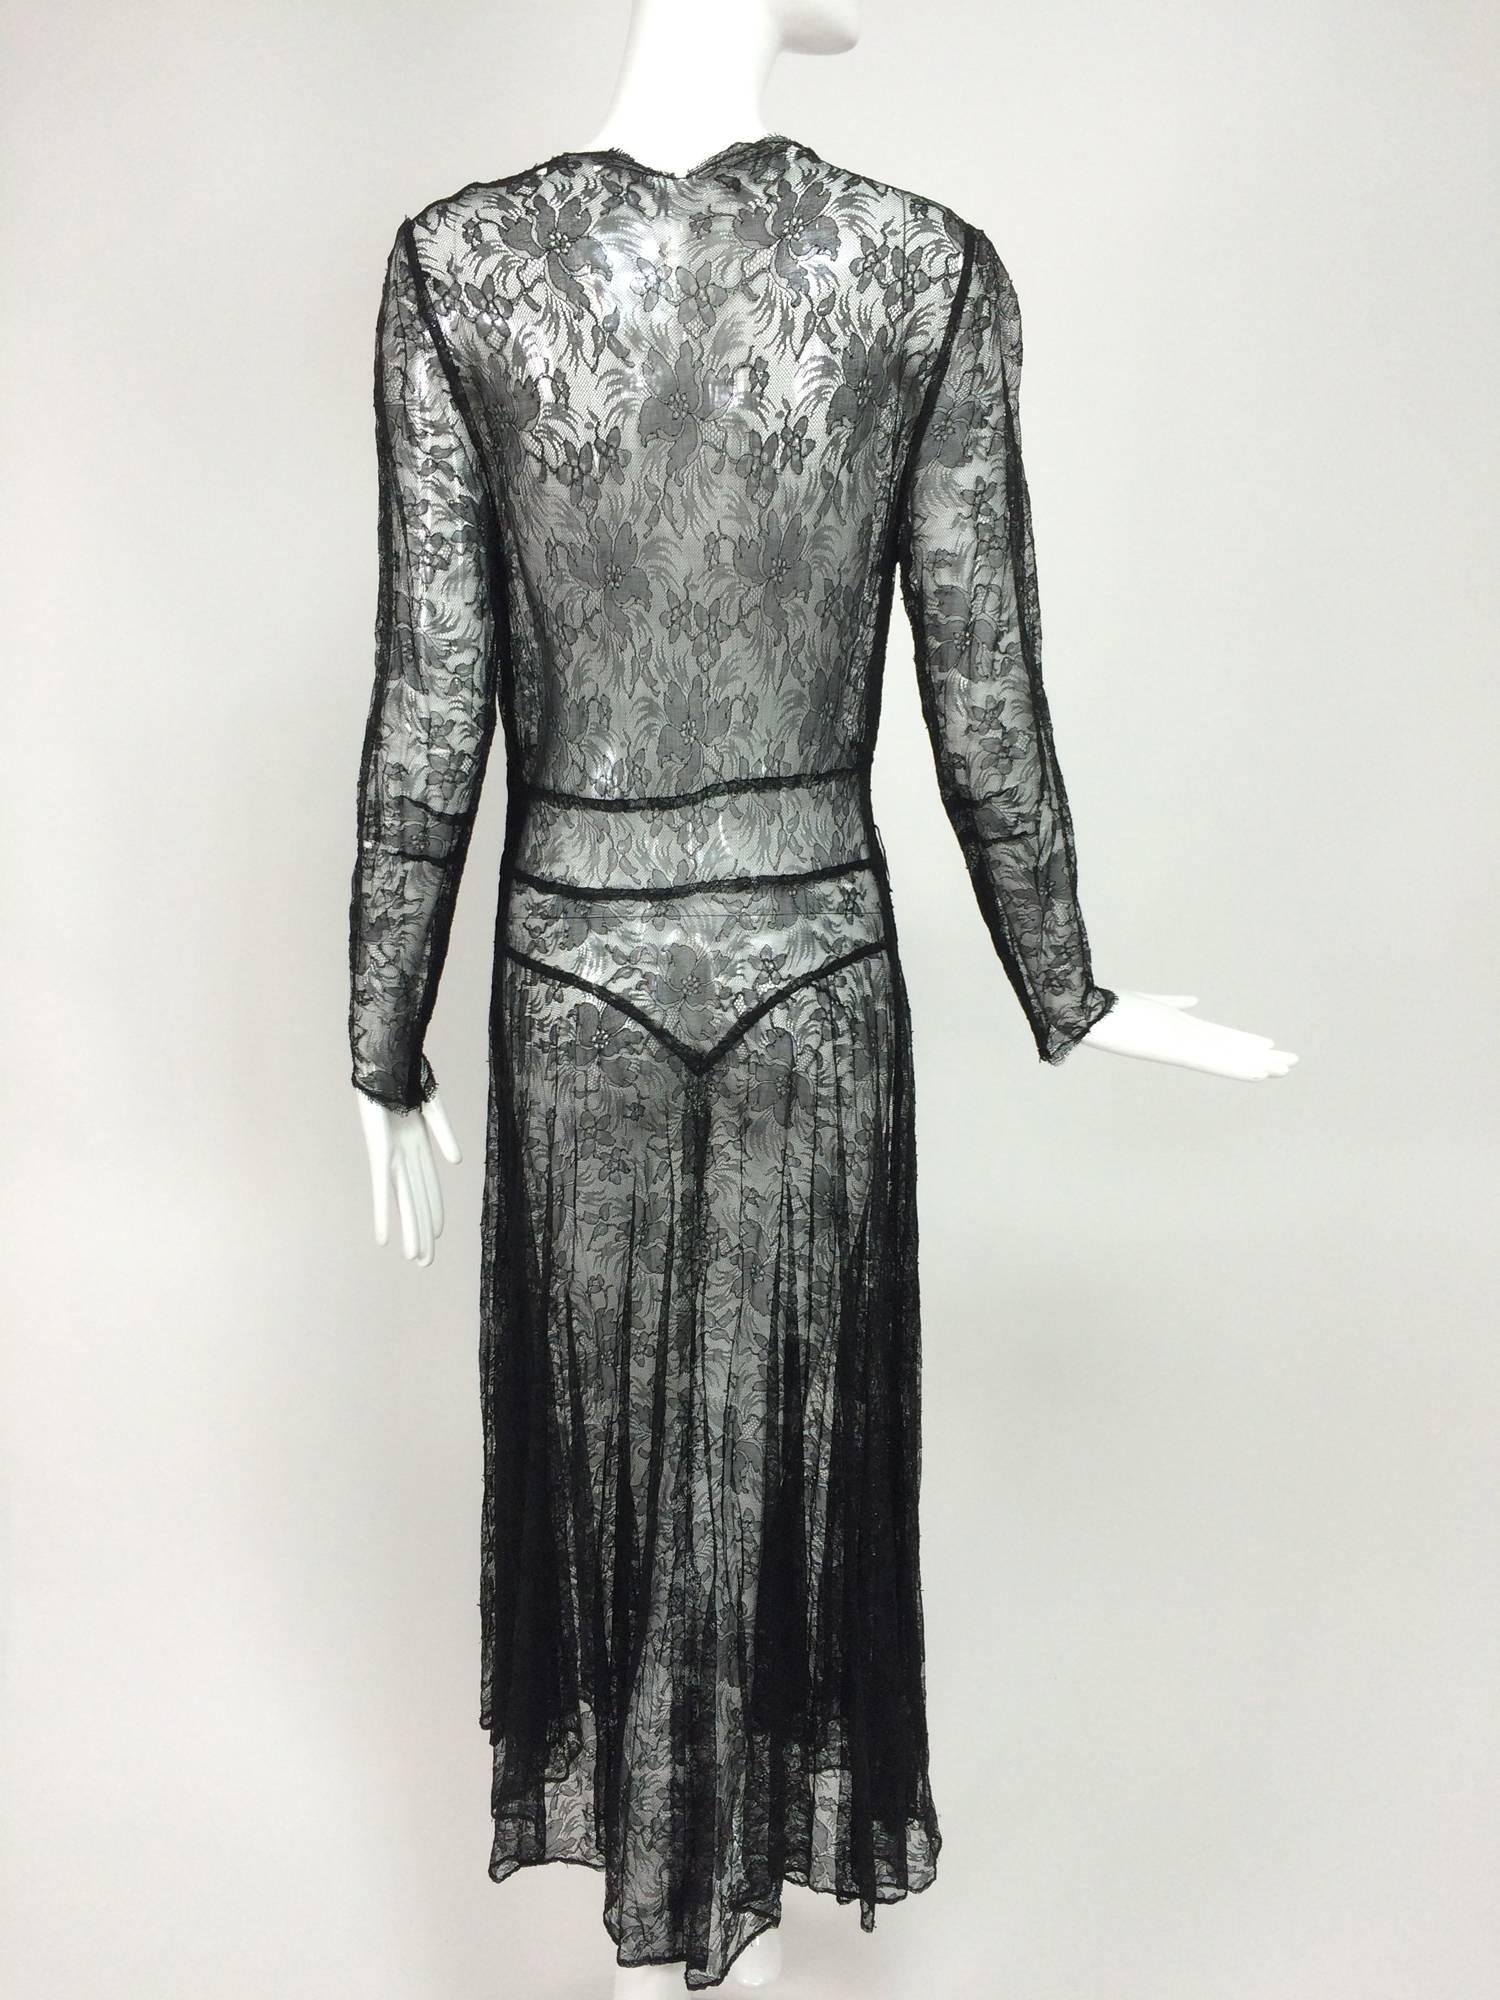 Black 1940s sheer black lace bias cut dress with plunge neckline